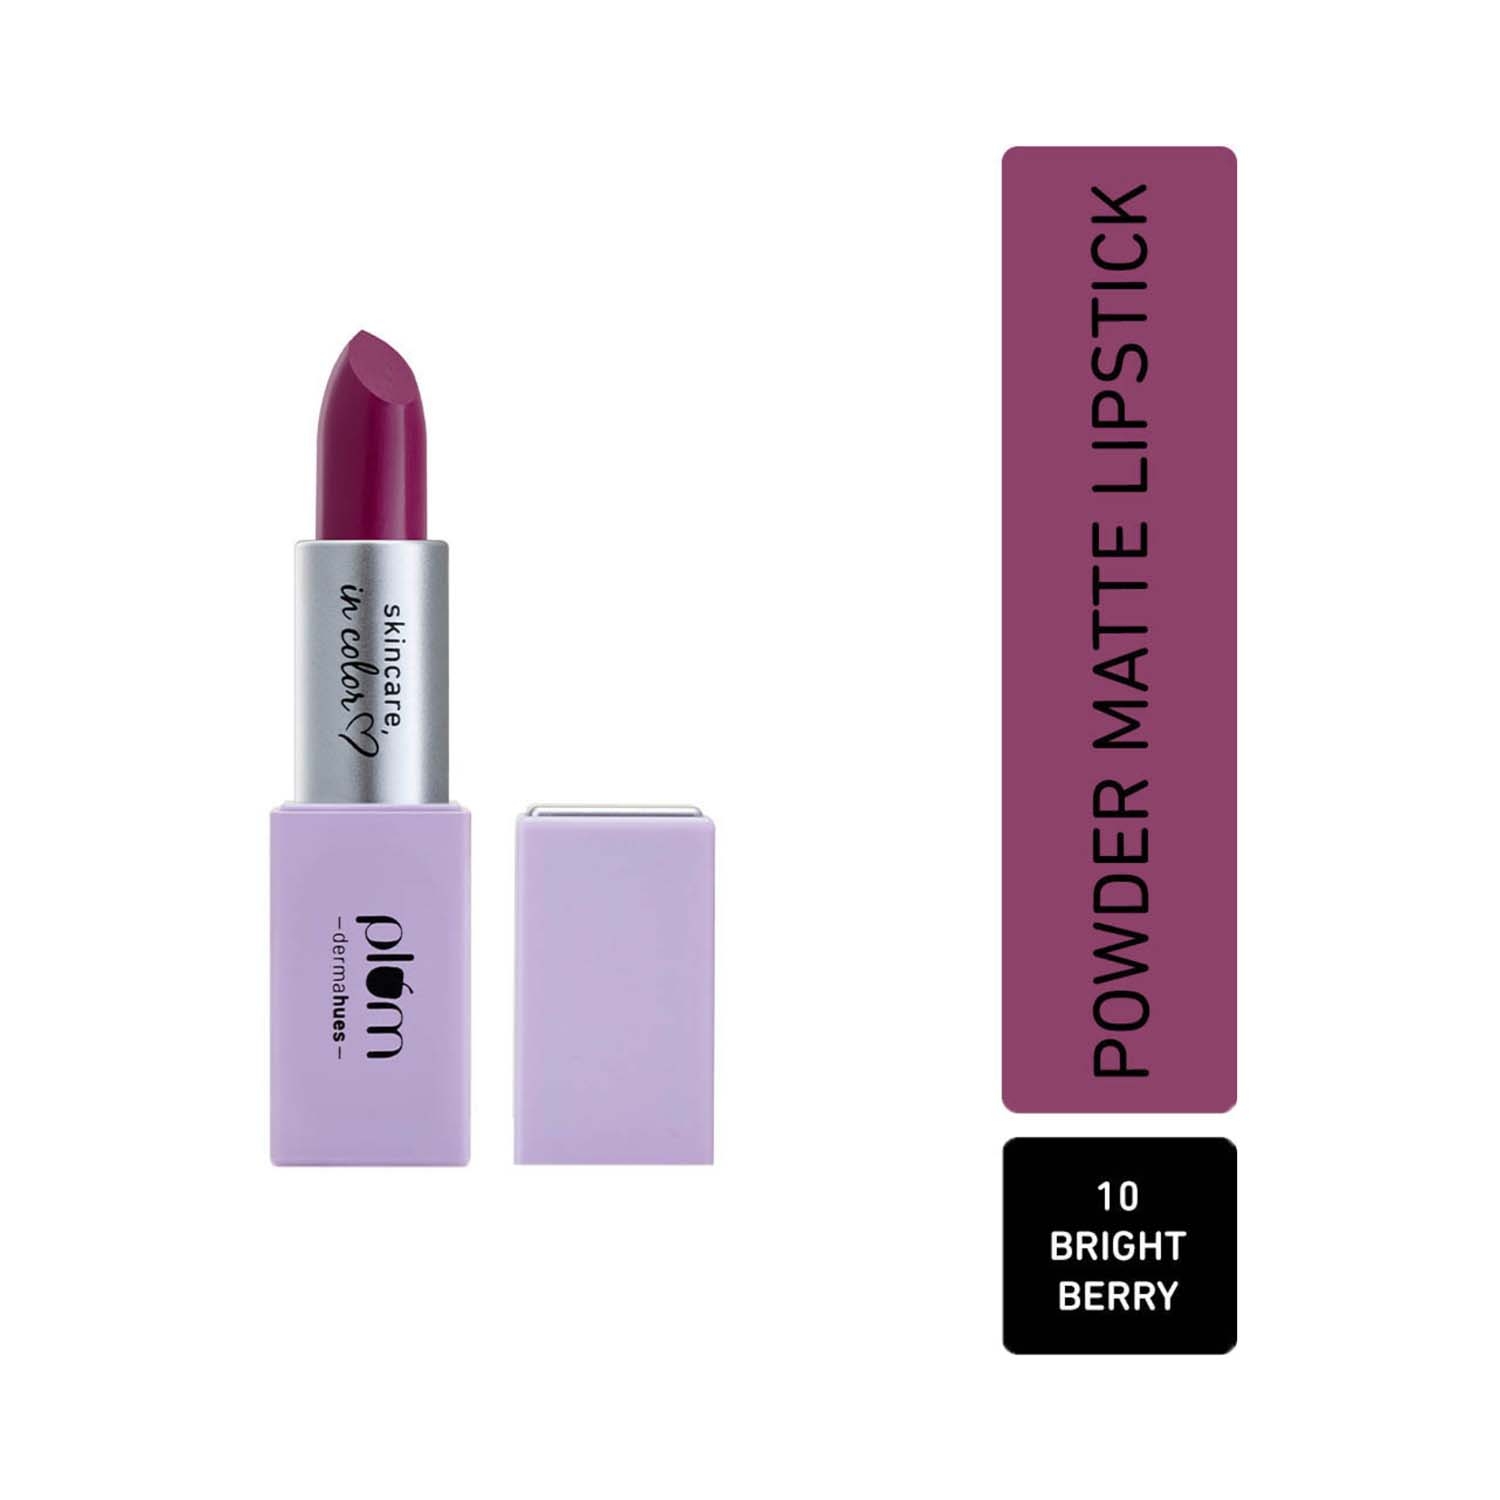 Plum | Plum Velvet Haze Powder Matte Lipstick - 10 Bright Berry (4.2g)